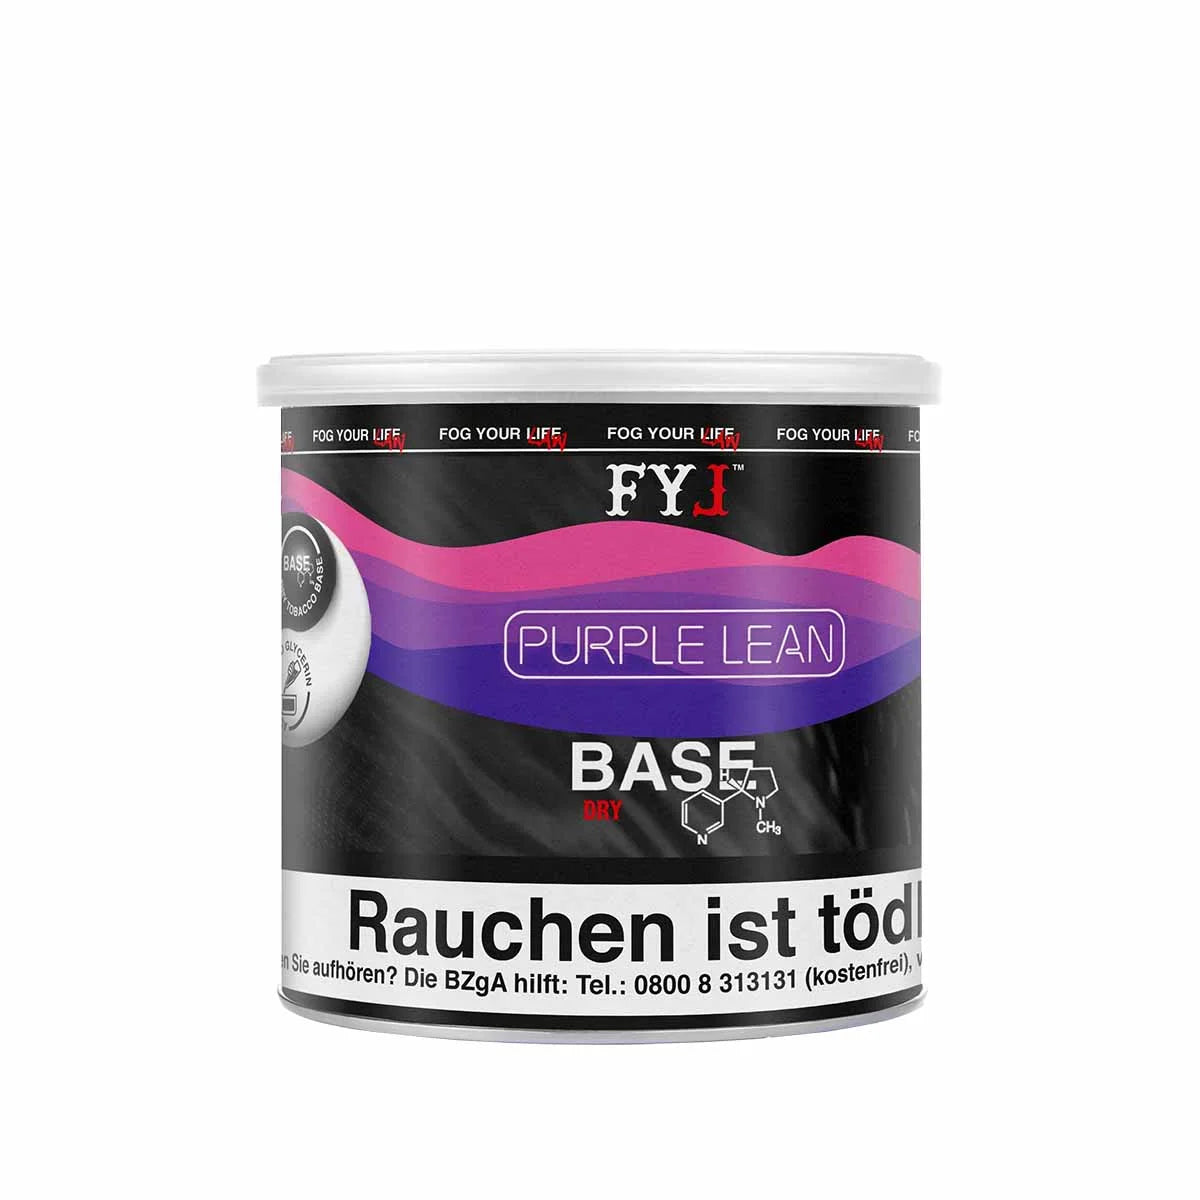 Fog Your Law - Dry Base - Purple Lean (65g)